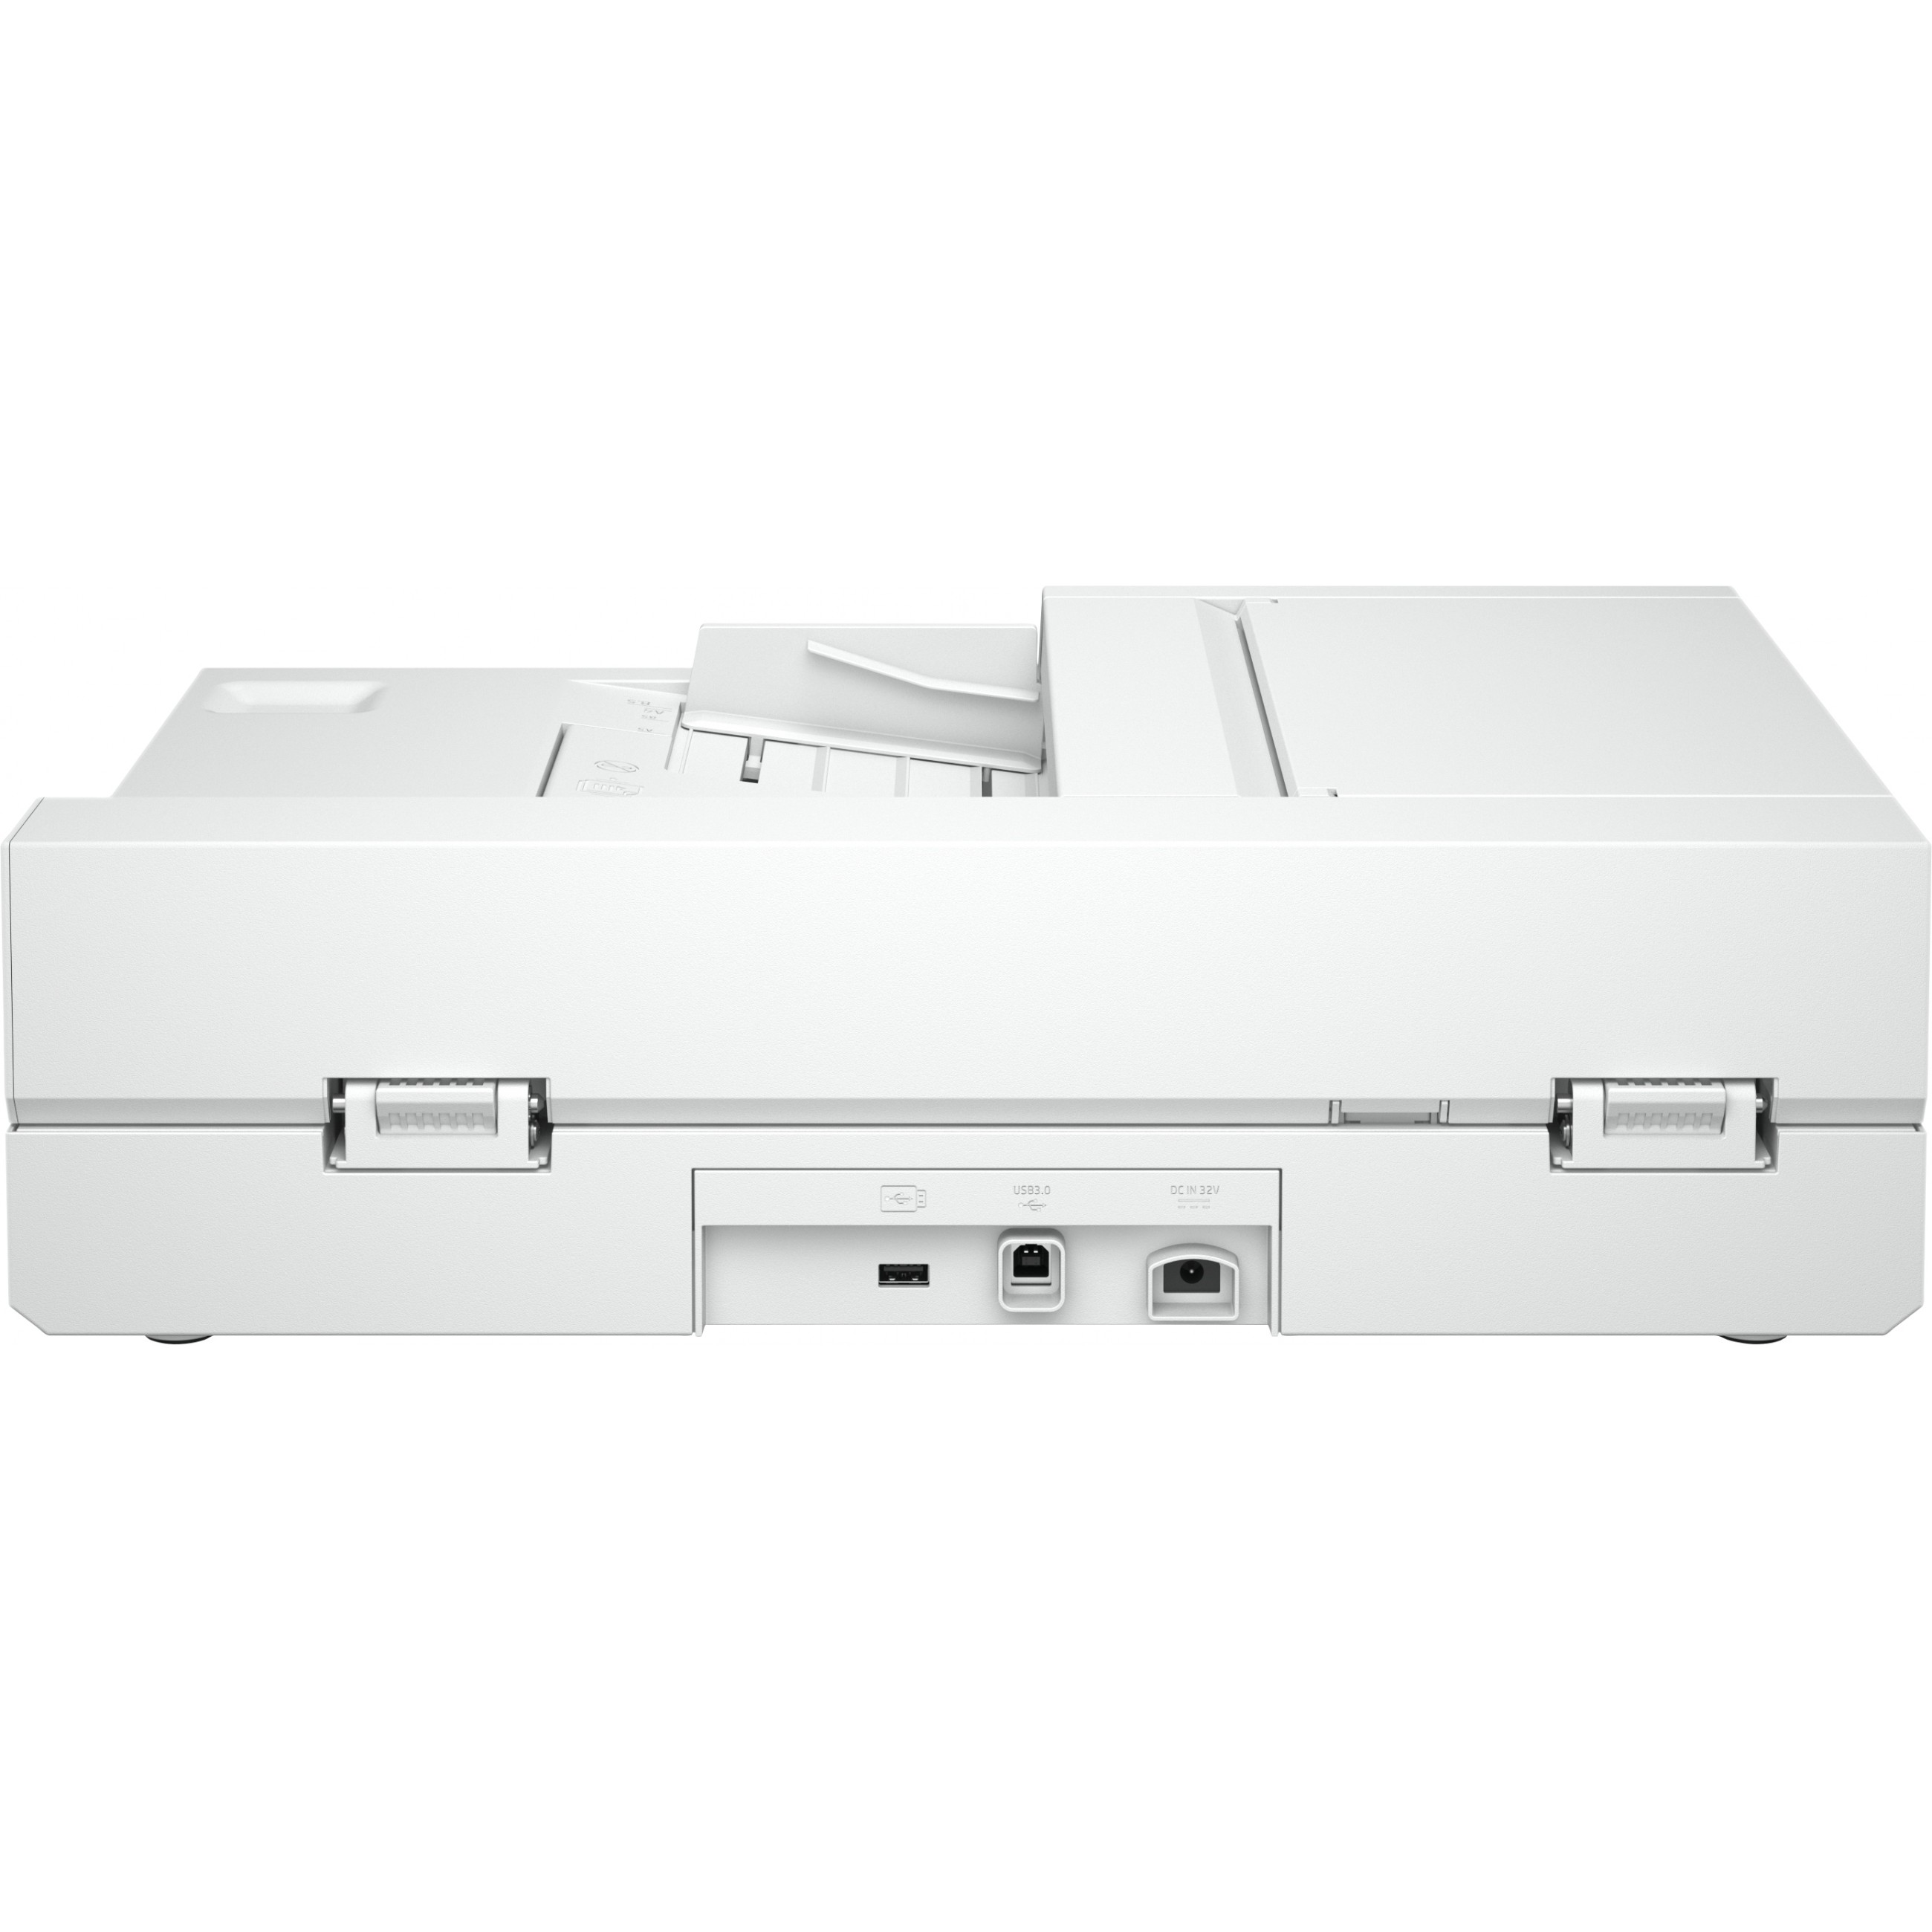 HP Scanjet Pro 3600 f1 Flachbett- & ADF-Scanner 1200 x 1200 DPI A4 Weiß